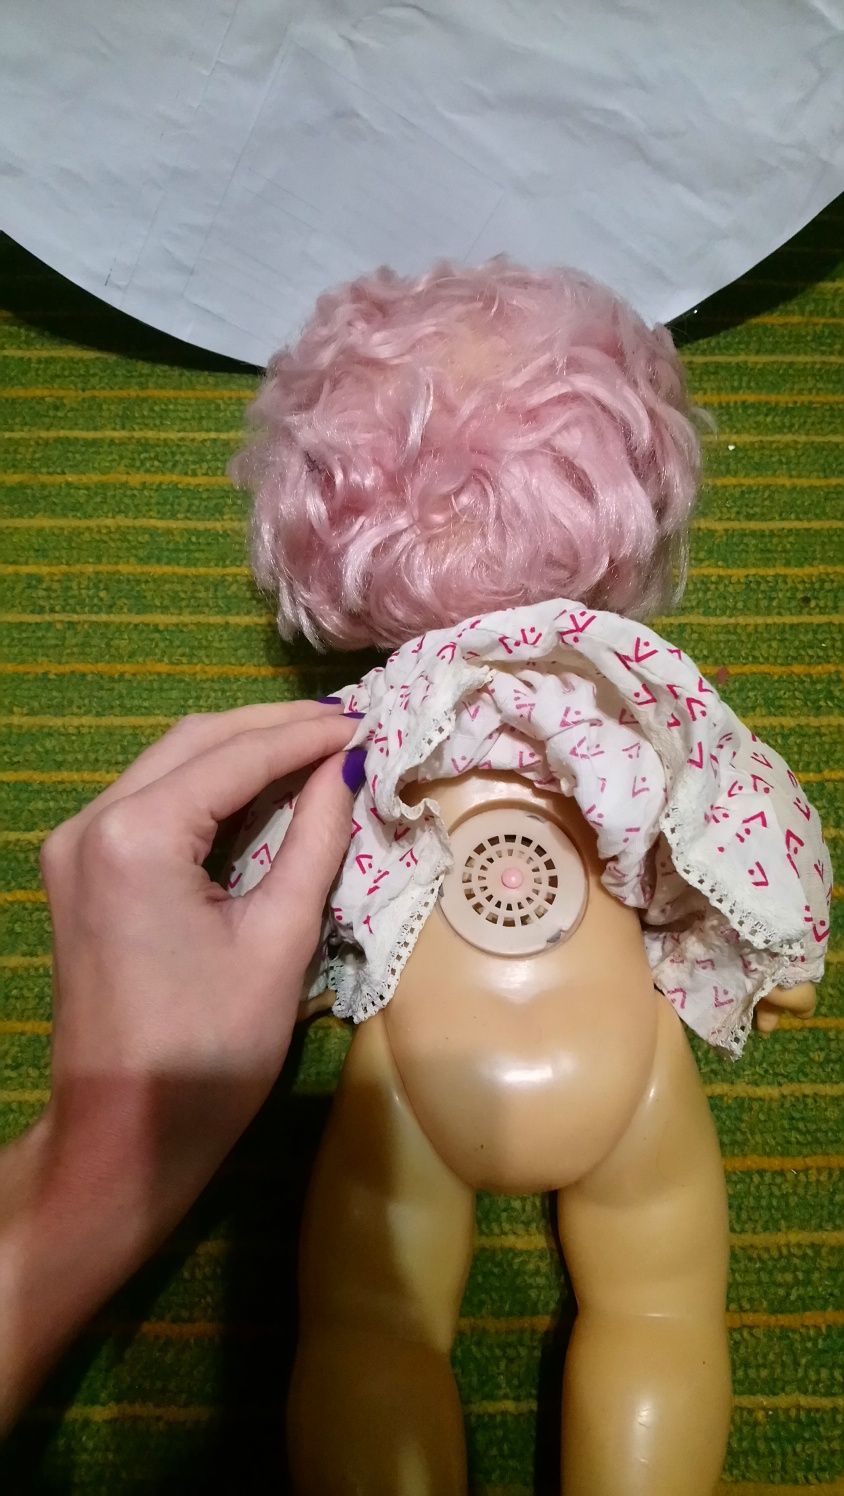 Кукла периода СССР